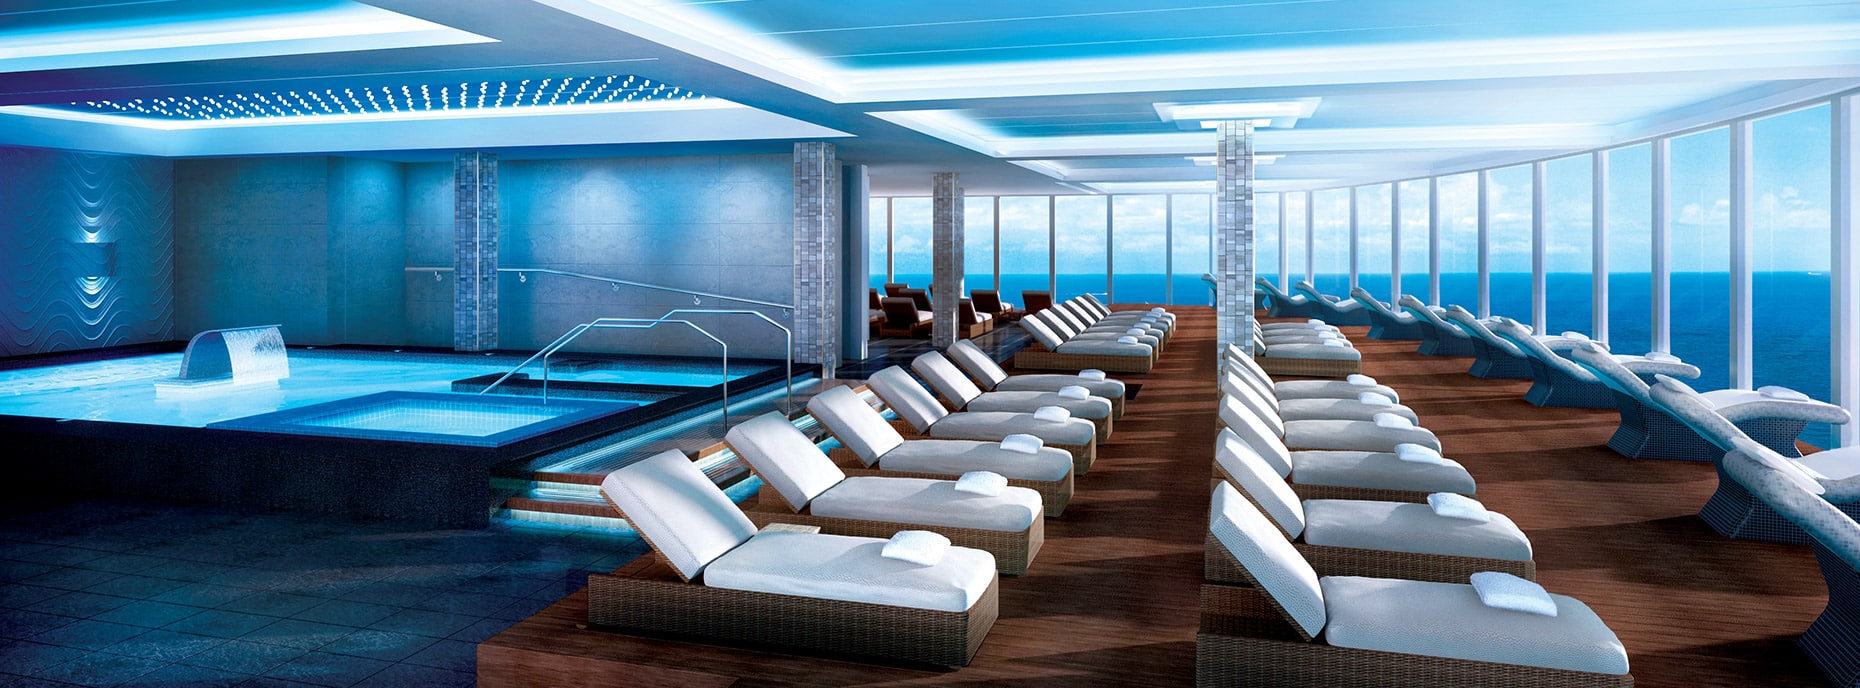 Best Luxury Cruise Ships | Norwegian Cruise Lines | Cruise Vacations | Spa